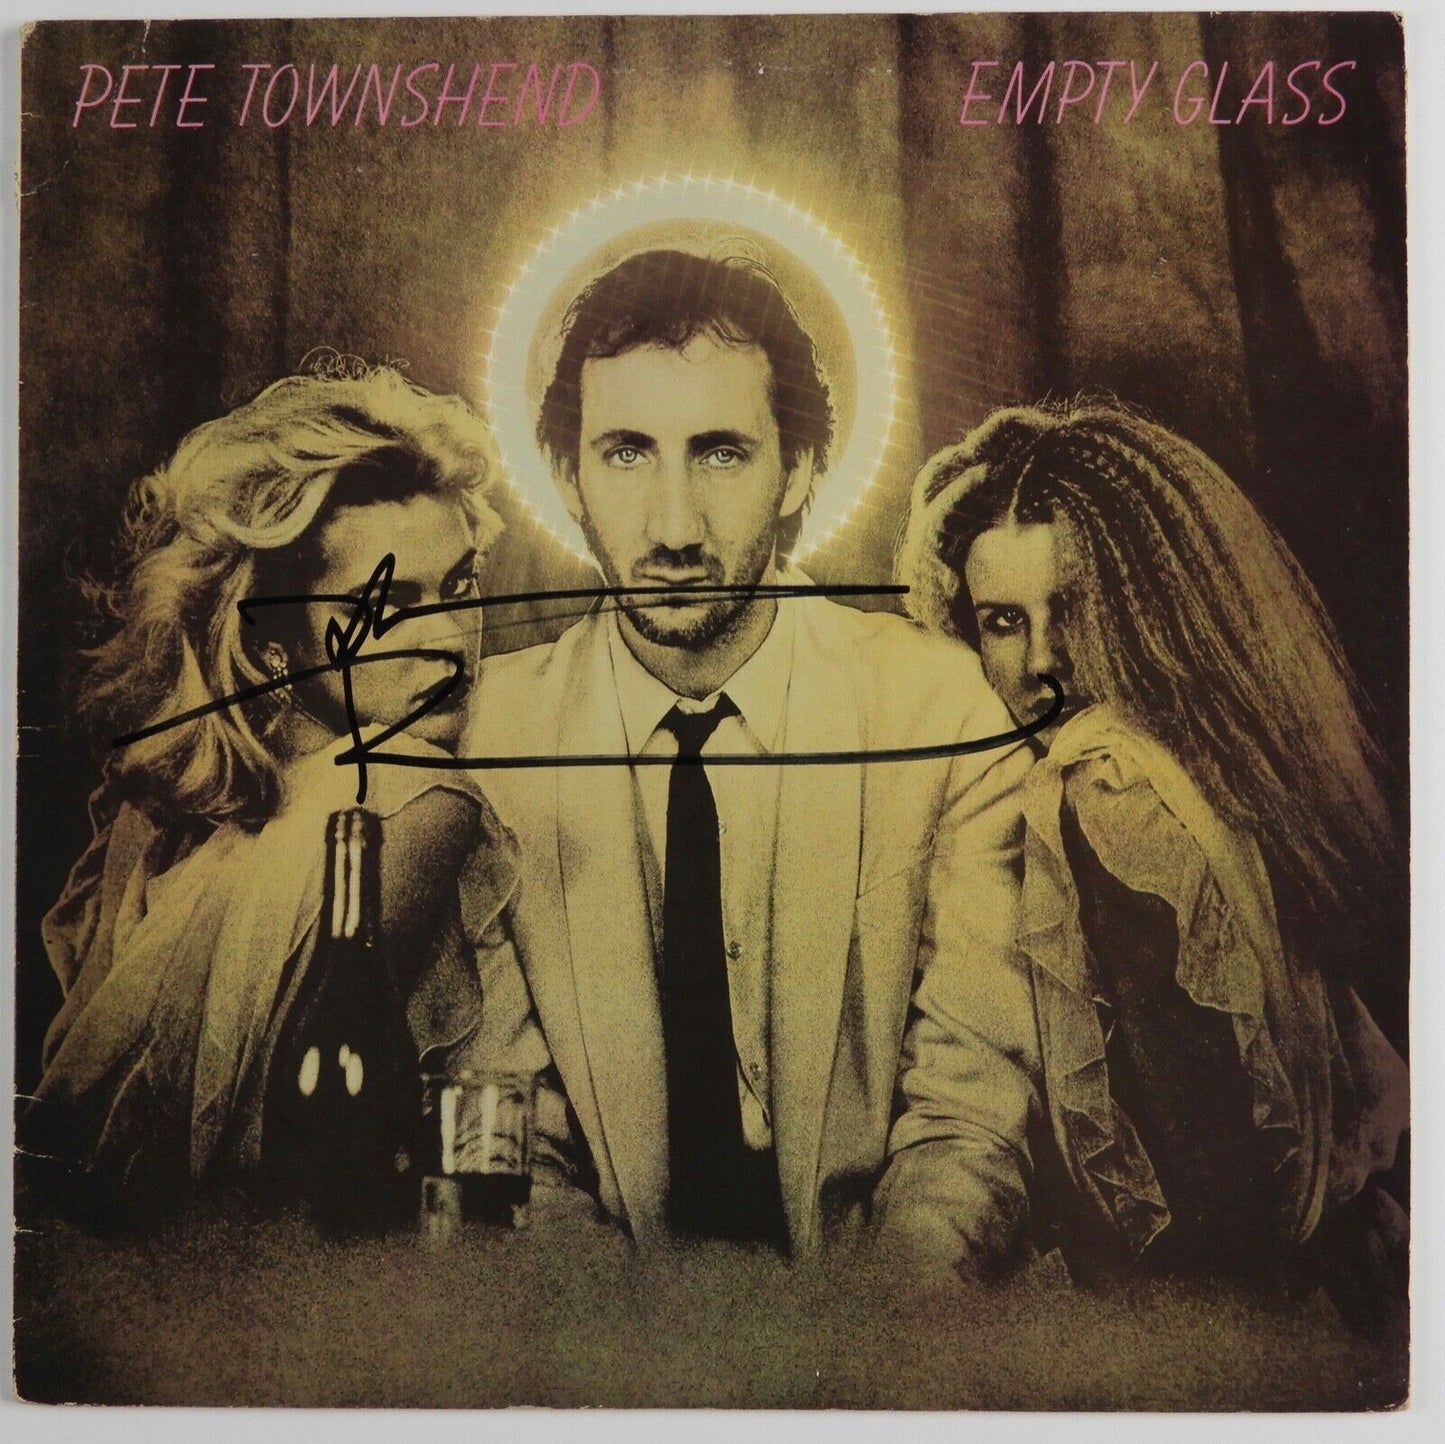 Pete Townshend The Who JSA Autograph Signed Record Album Vinyl Empty Glass